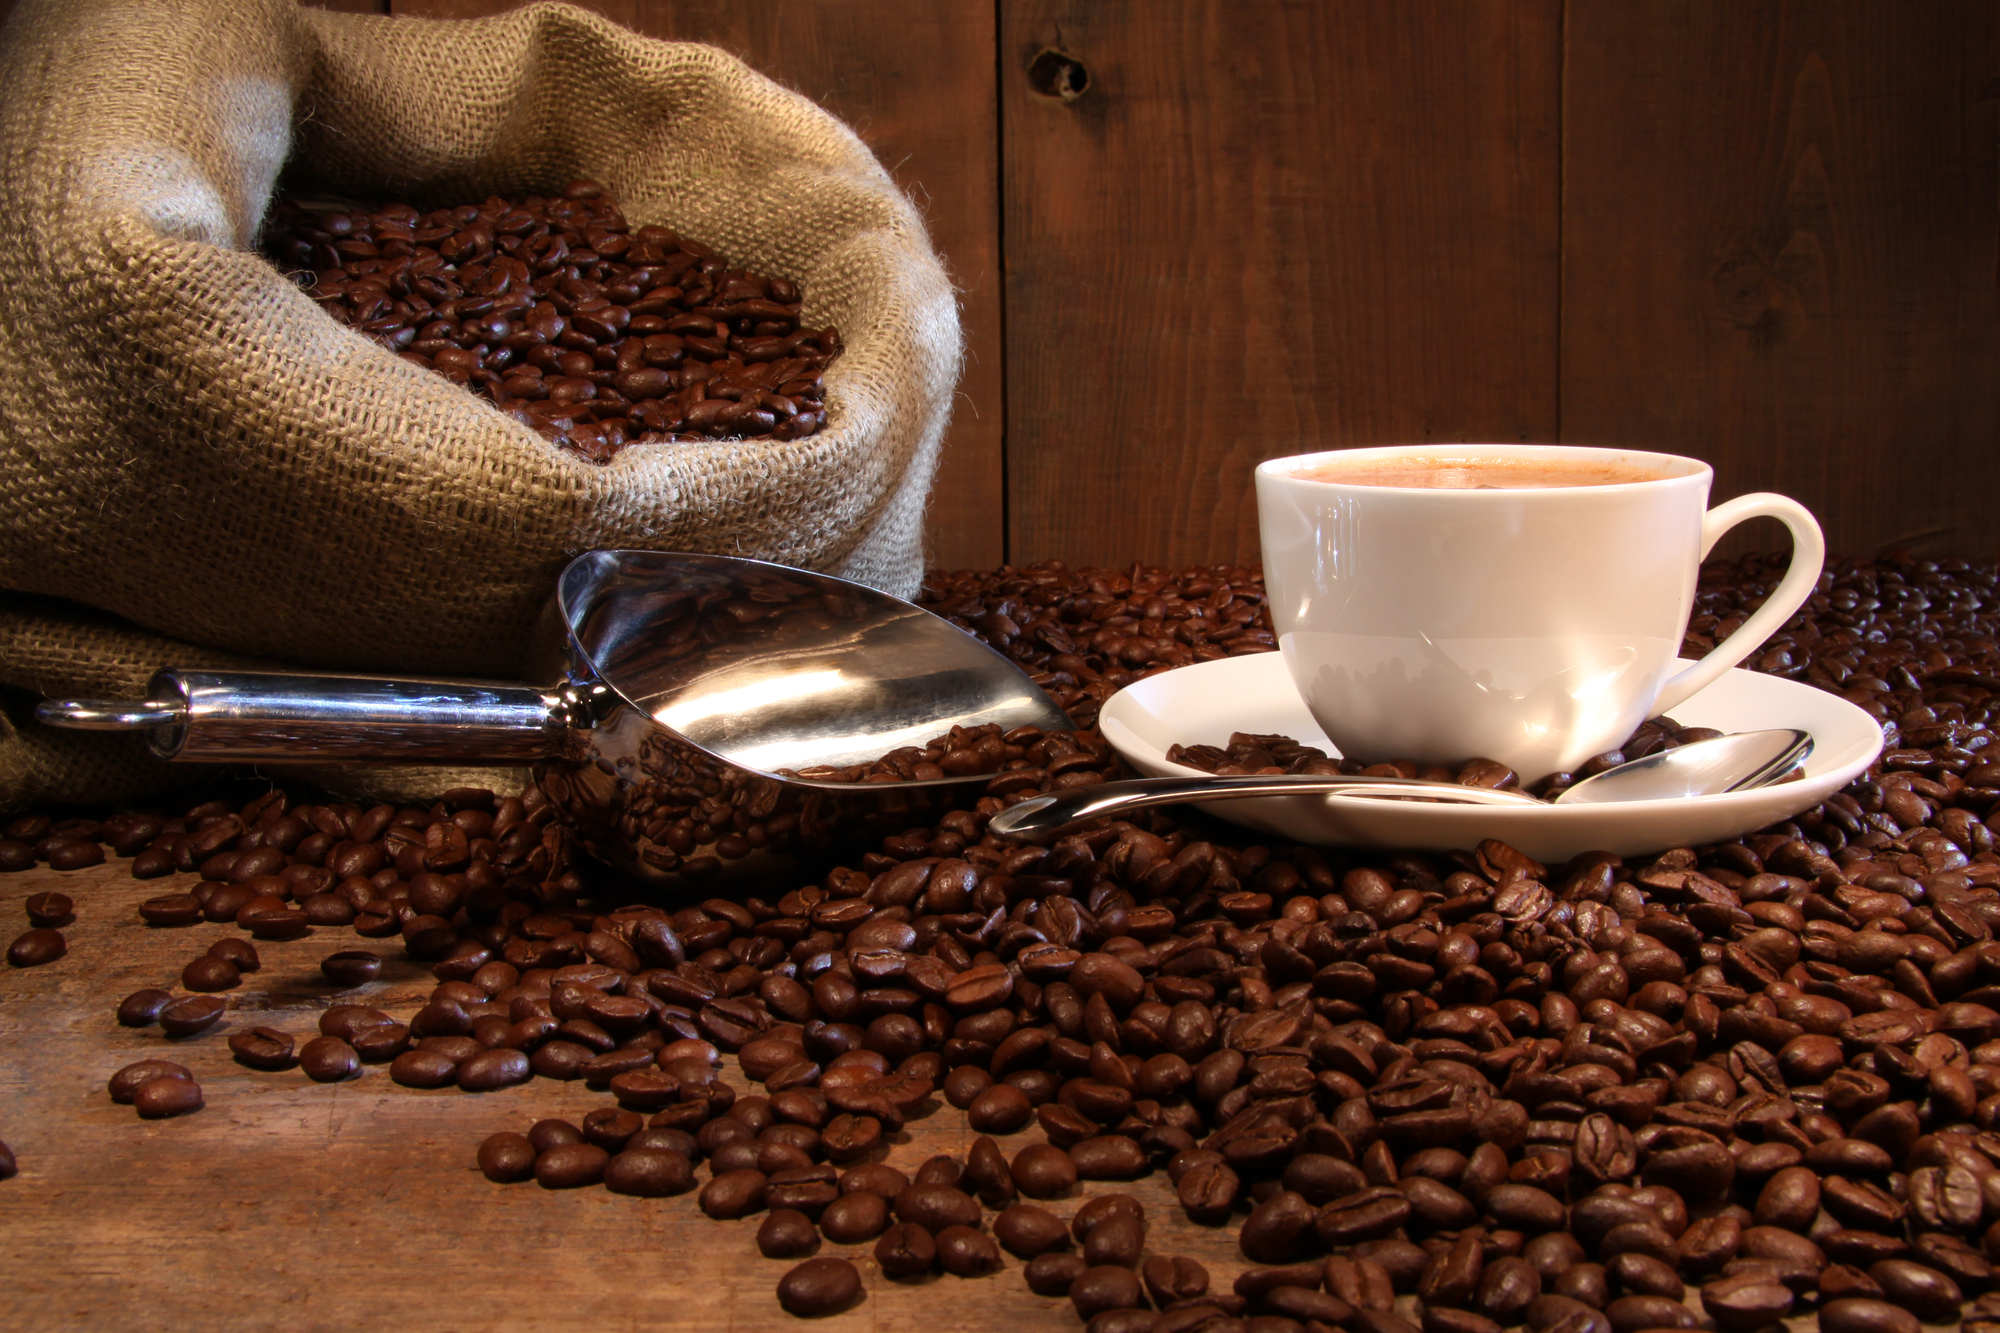 bEST COFFEE SPOTS IN MONTREAL